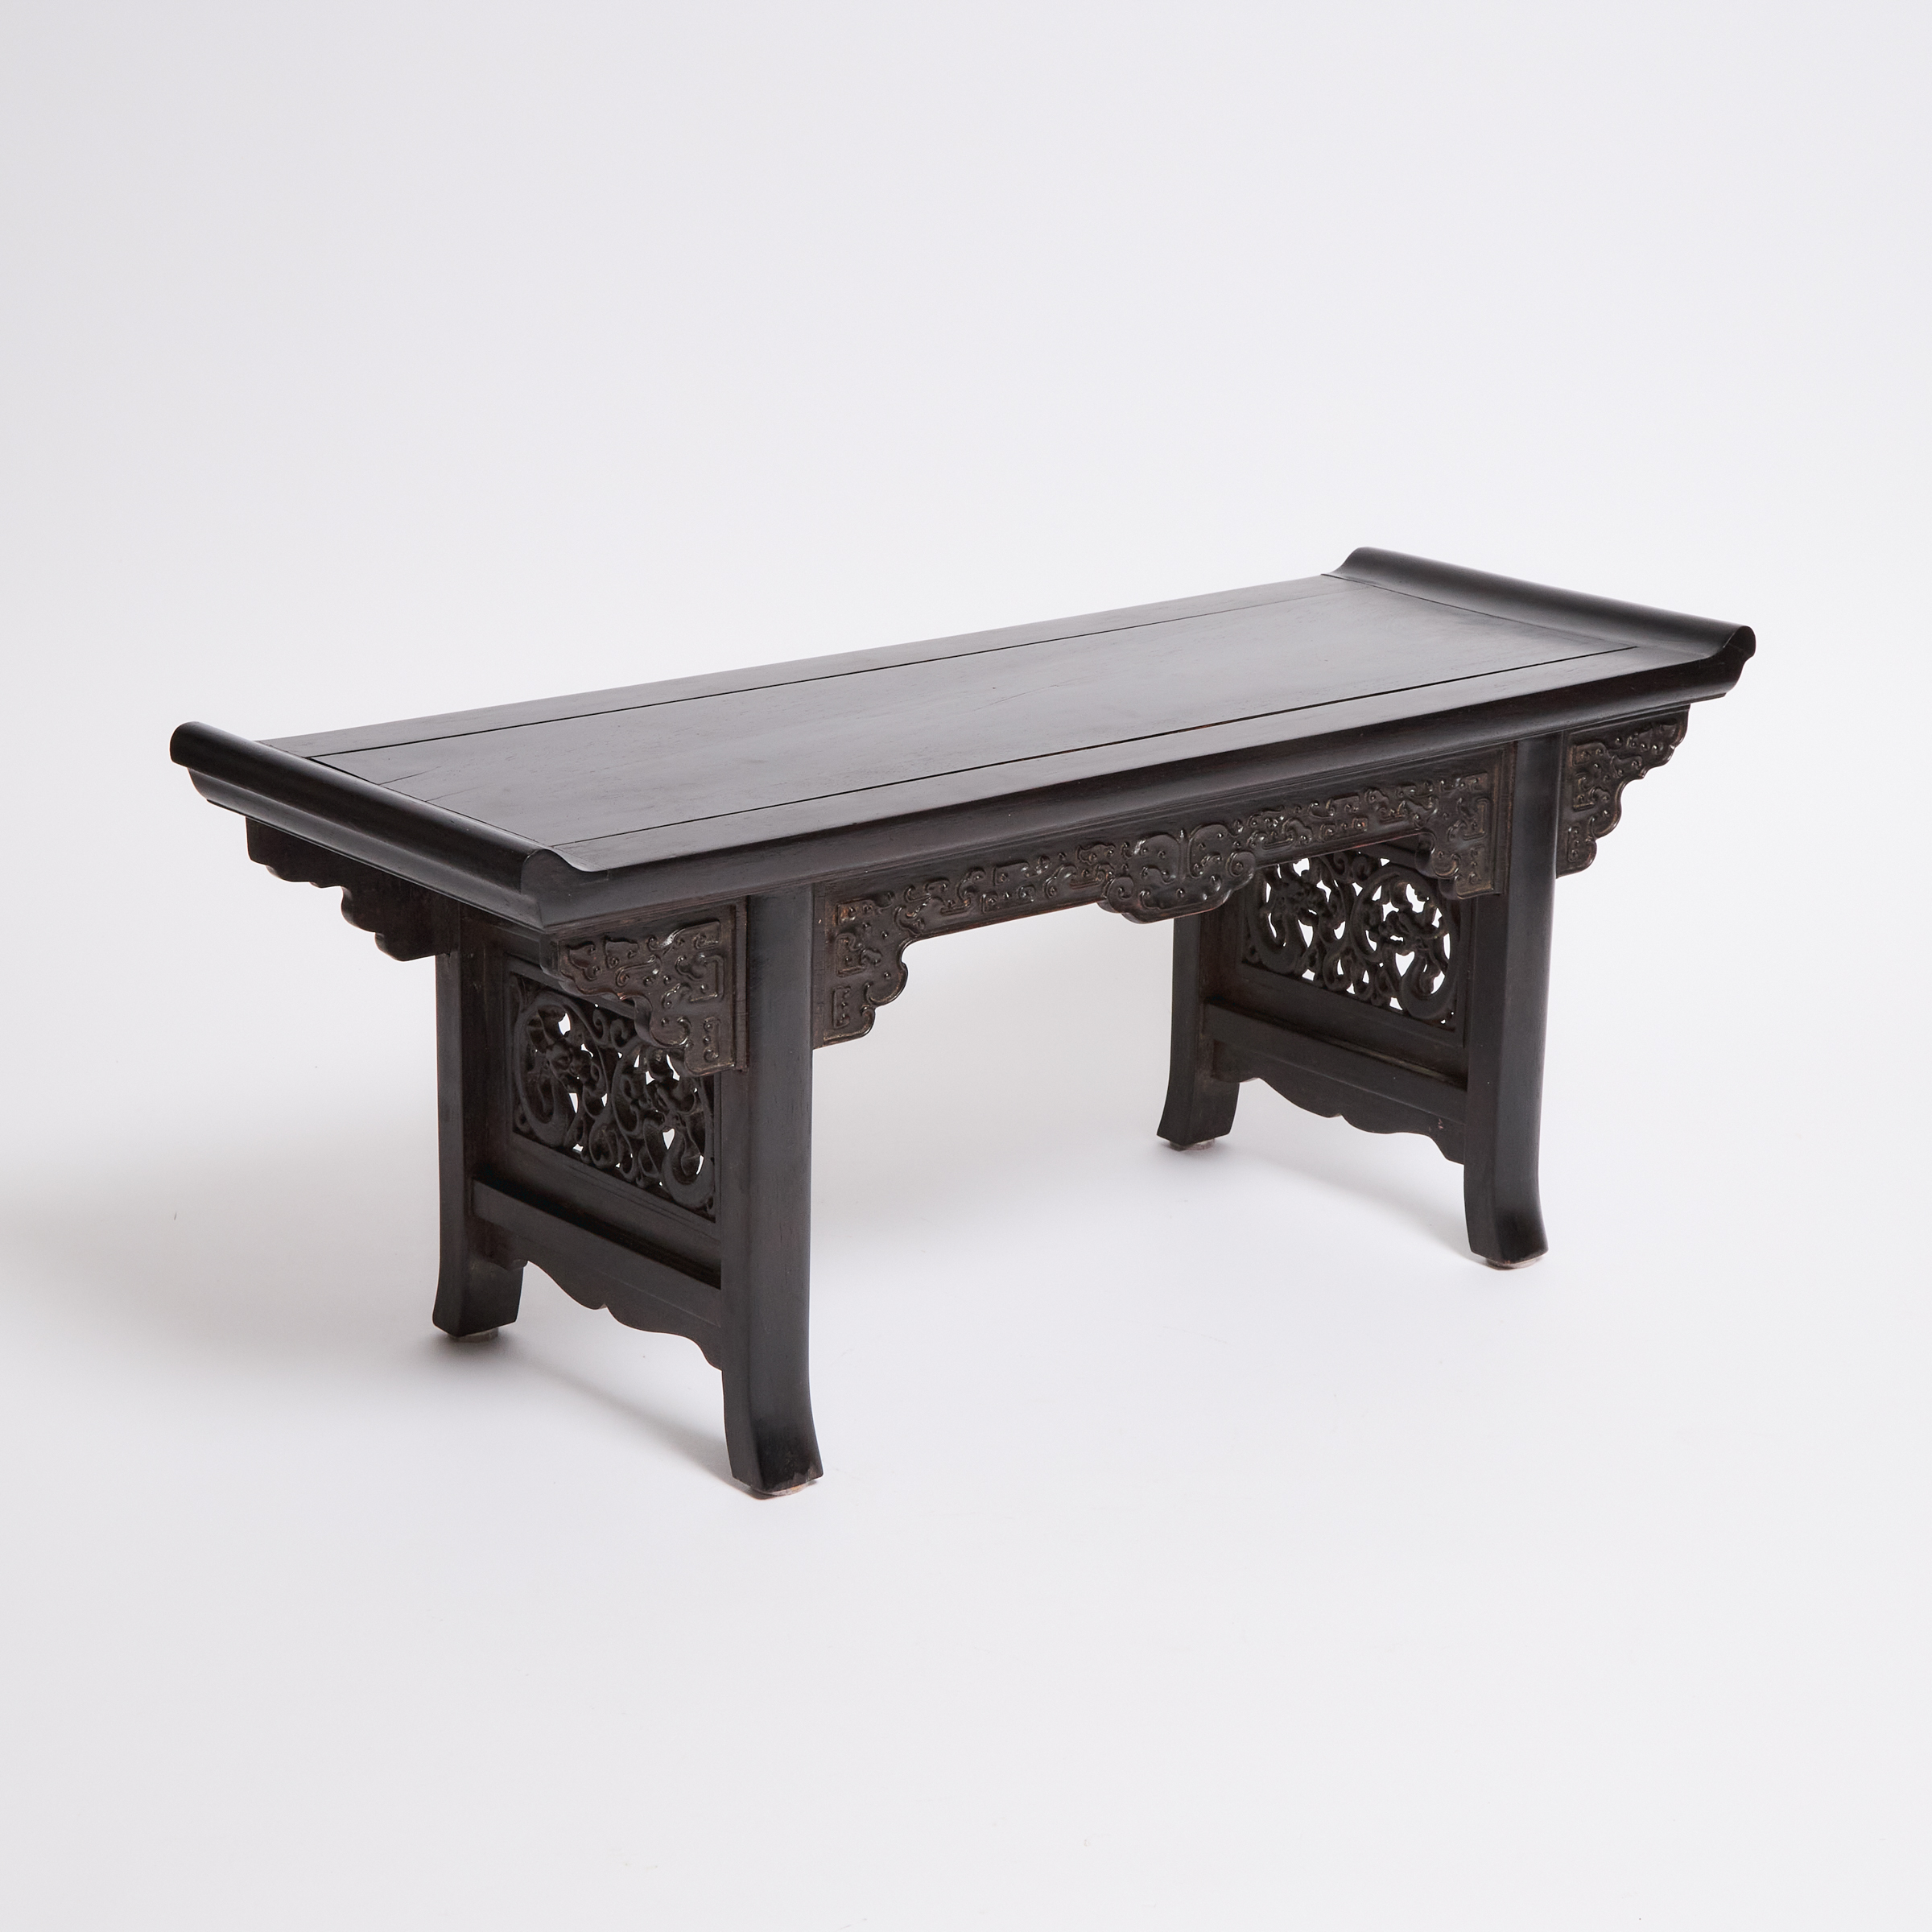 A Large Zitan Trestle Leg Table Form 2fb05d2